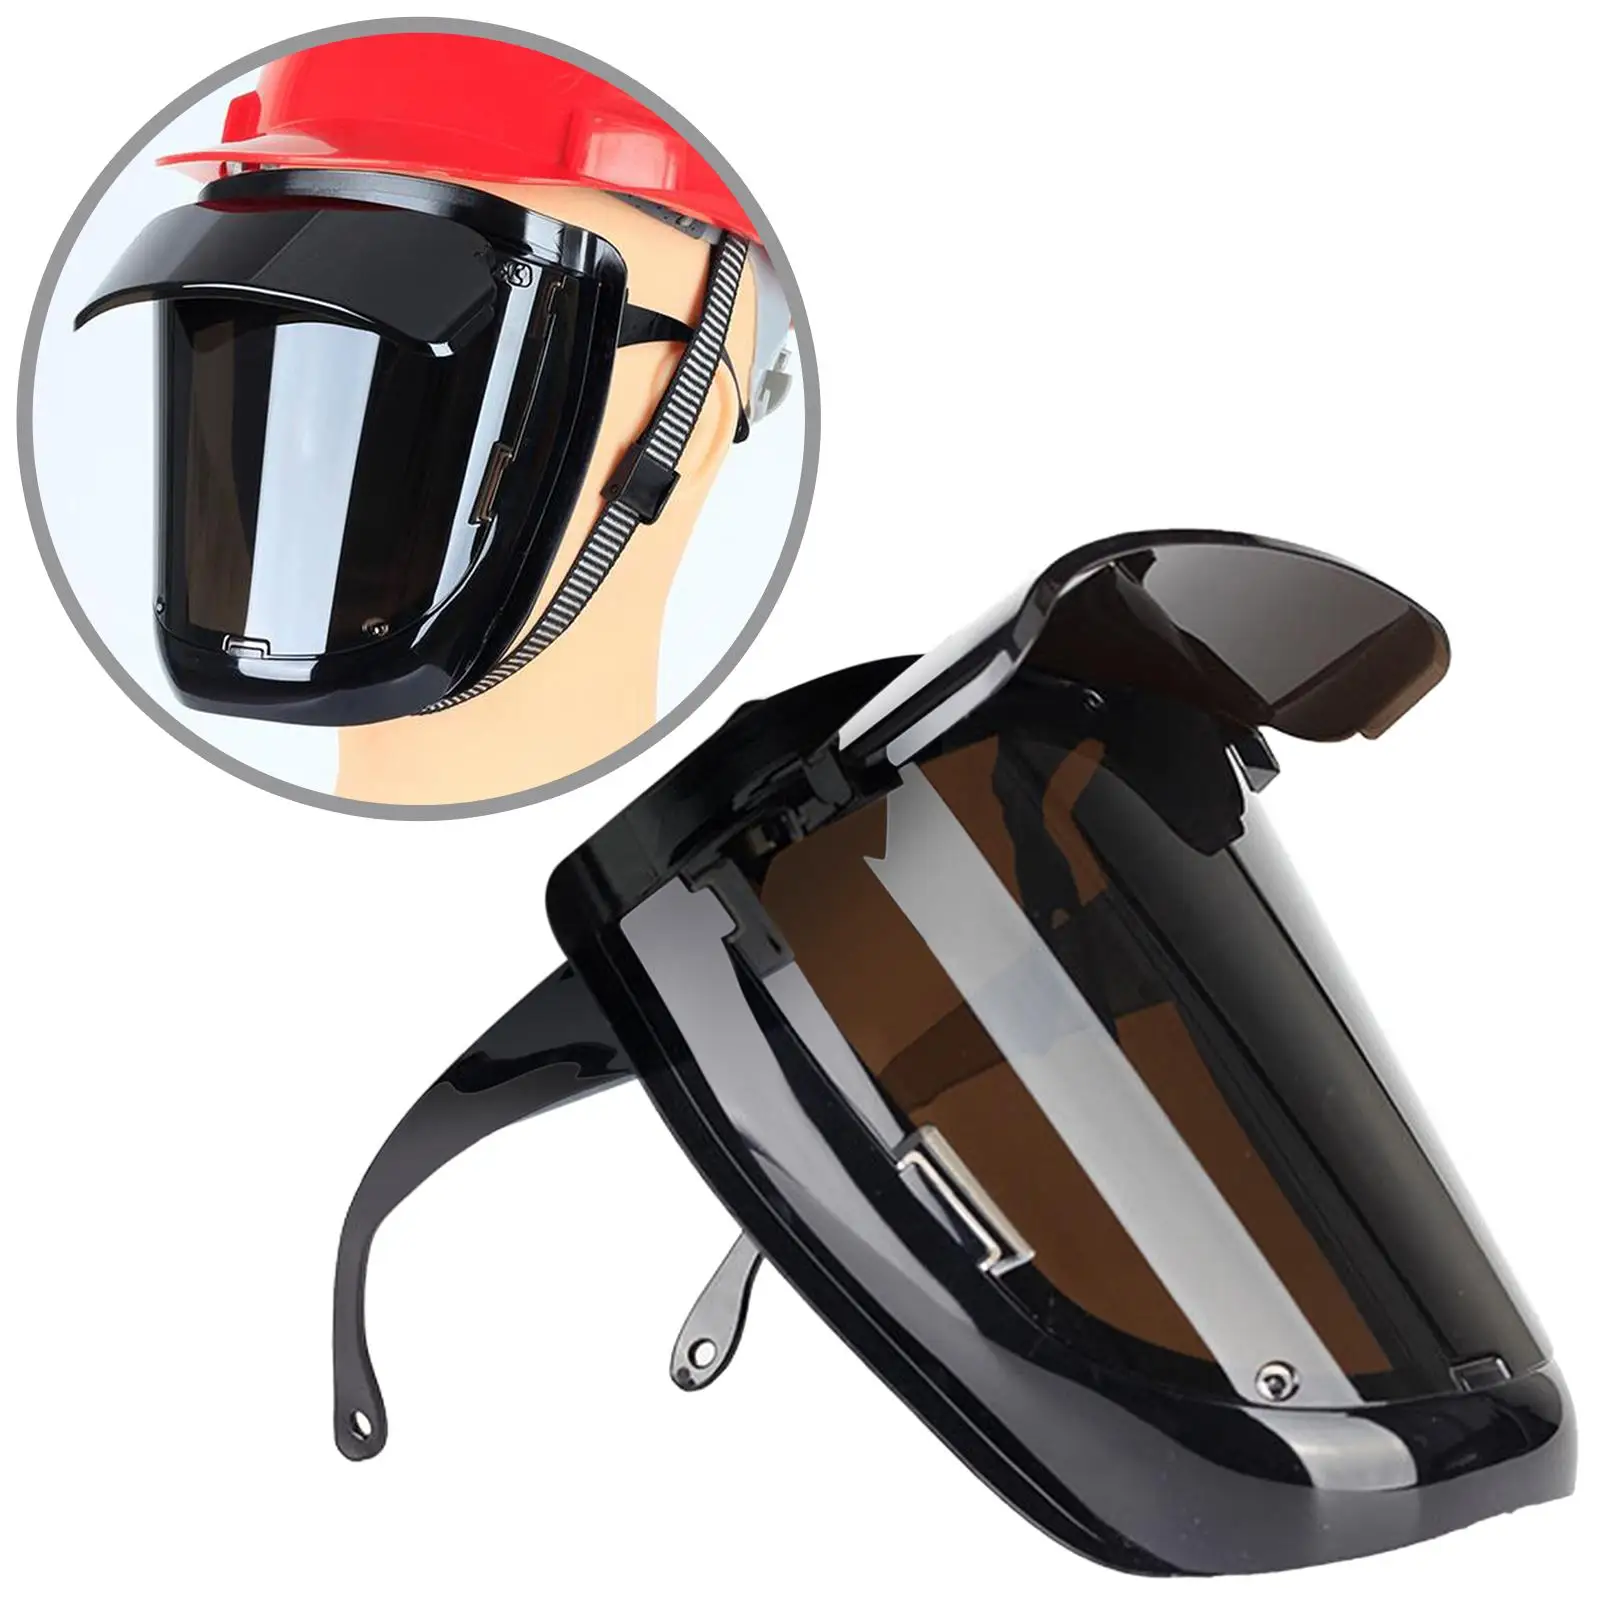 Professional Welding Helmet Welder Glasses Splash Proof Full Protection Welder Face Mask Face Protector for Mig TIG ARC